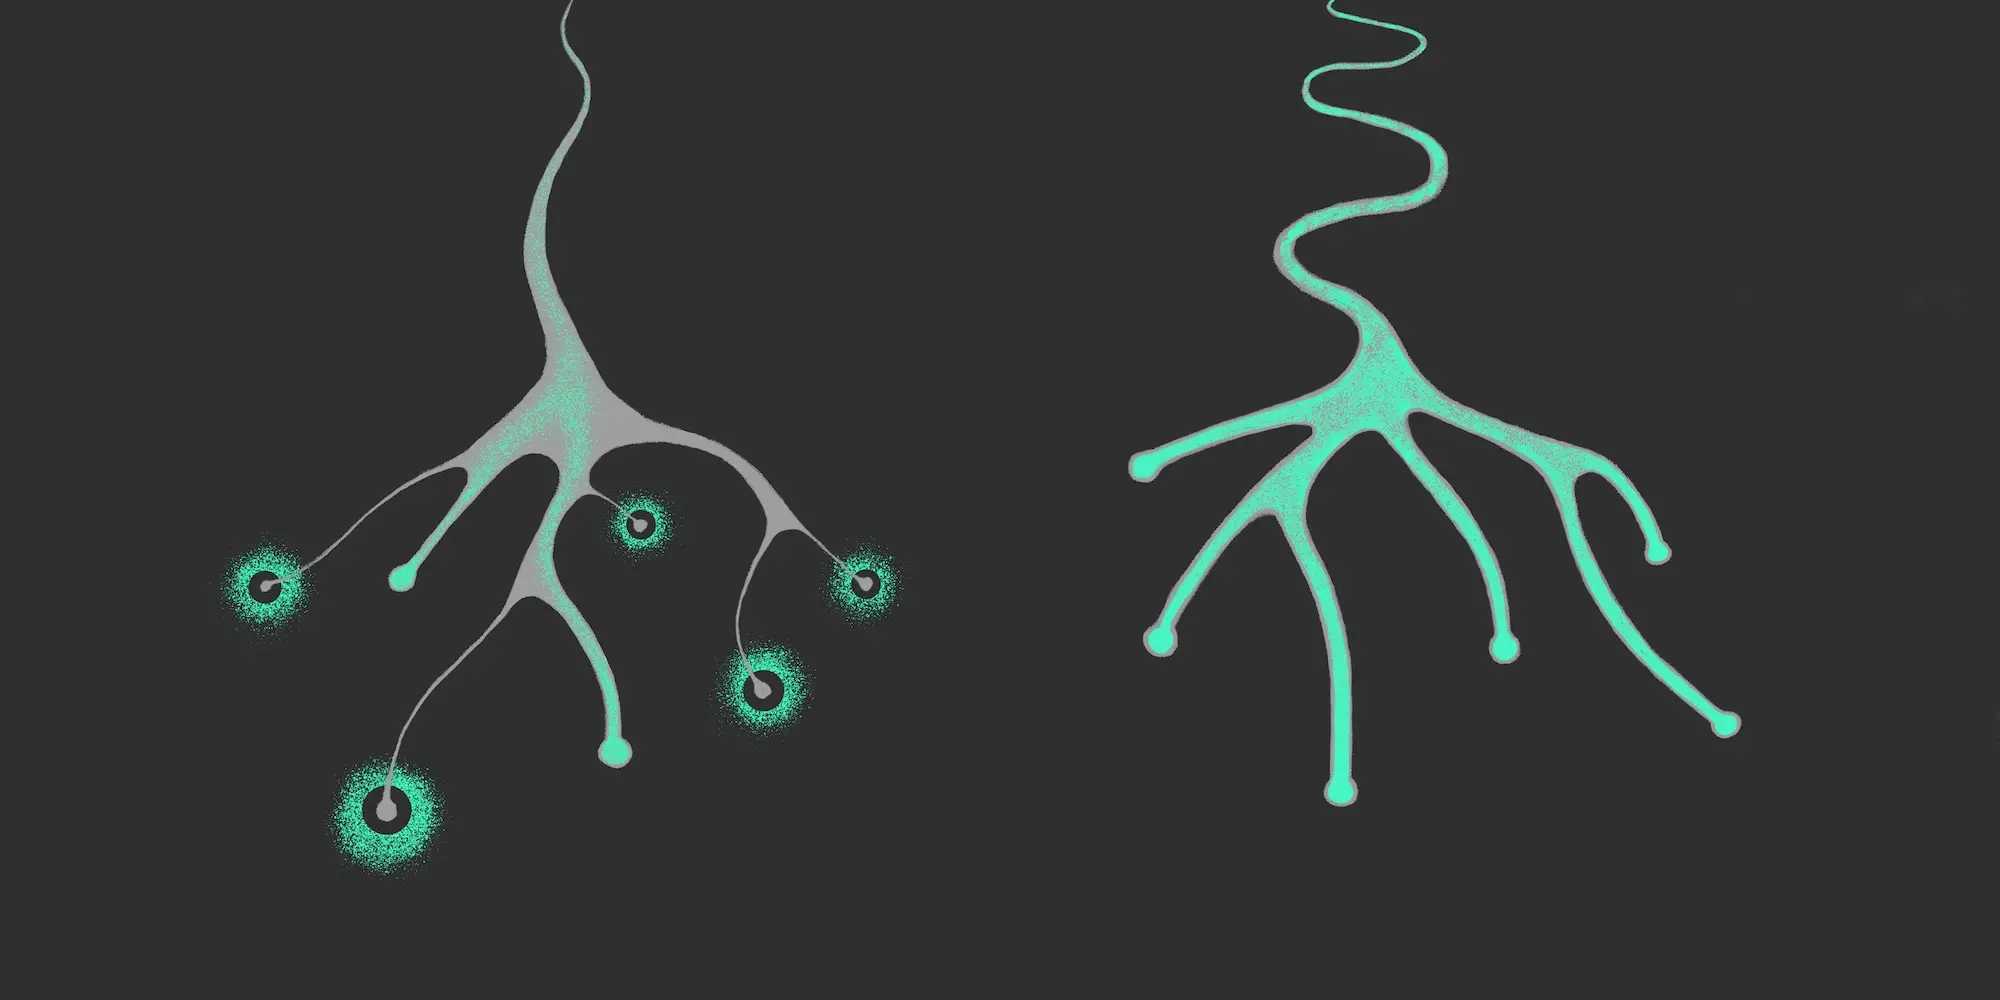 Artistic closeup rendering of neurons in the brain 